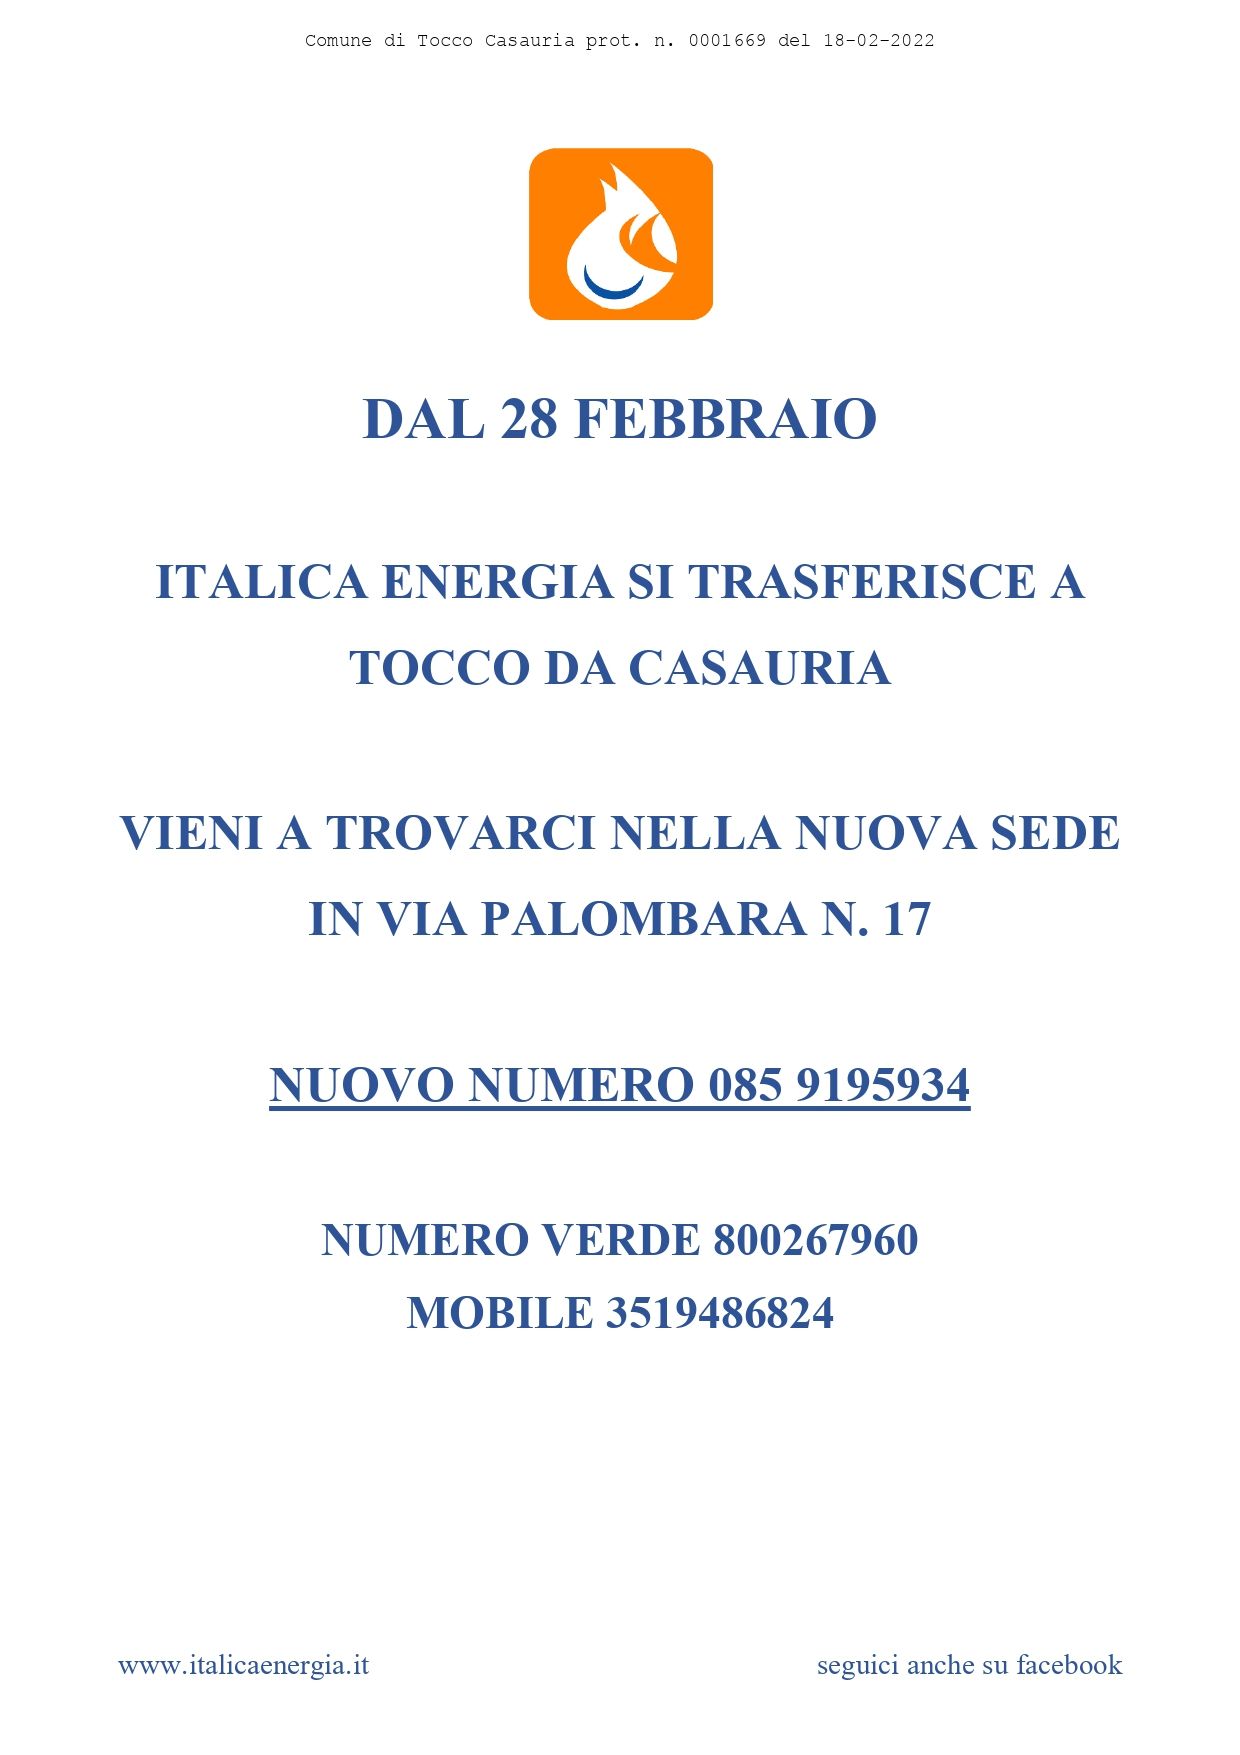 ITALICA ENERGIA SI TRASFERISCE A TOCCO DA CASAURIA